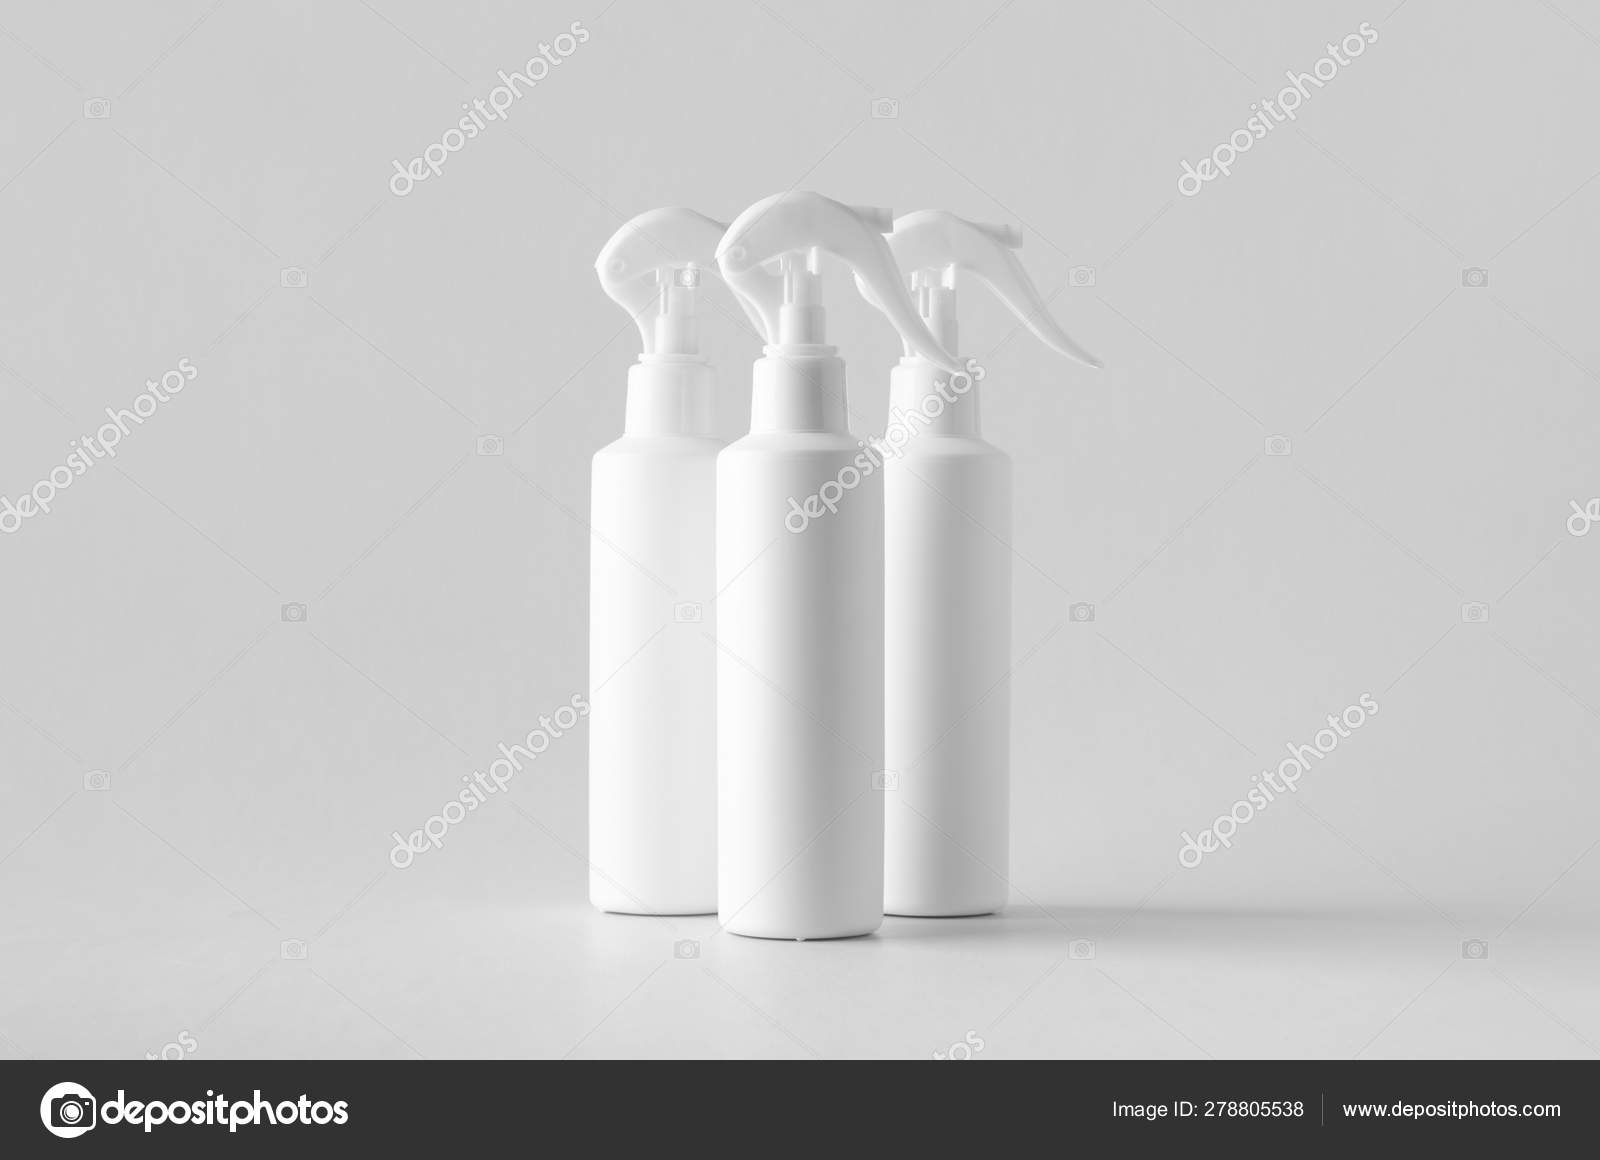 Download White Cosmetic Trigger Sprayer Bottle Mockup Stock Photo C Shablonstudio 278805538 Yellowimages Mockups